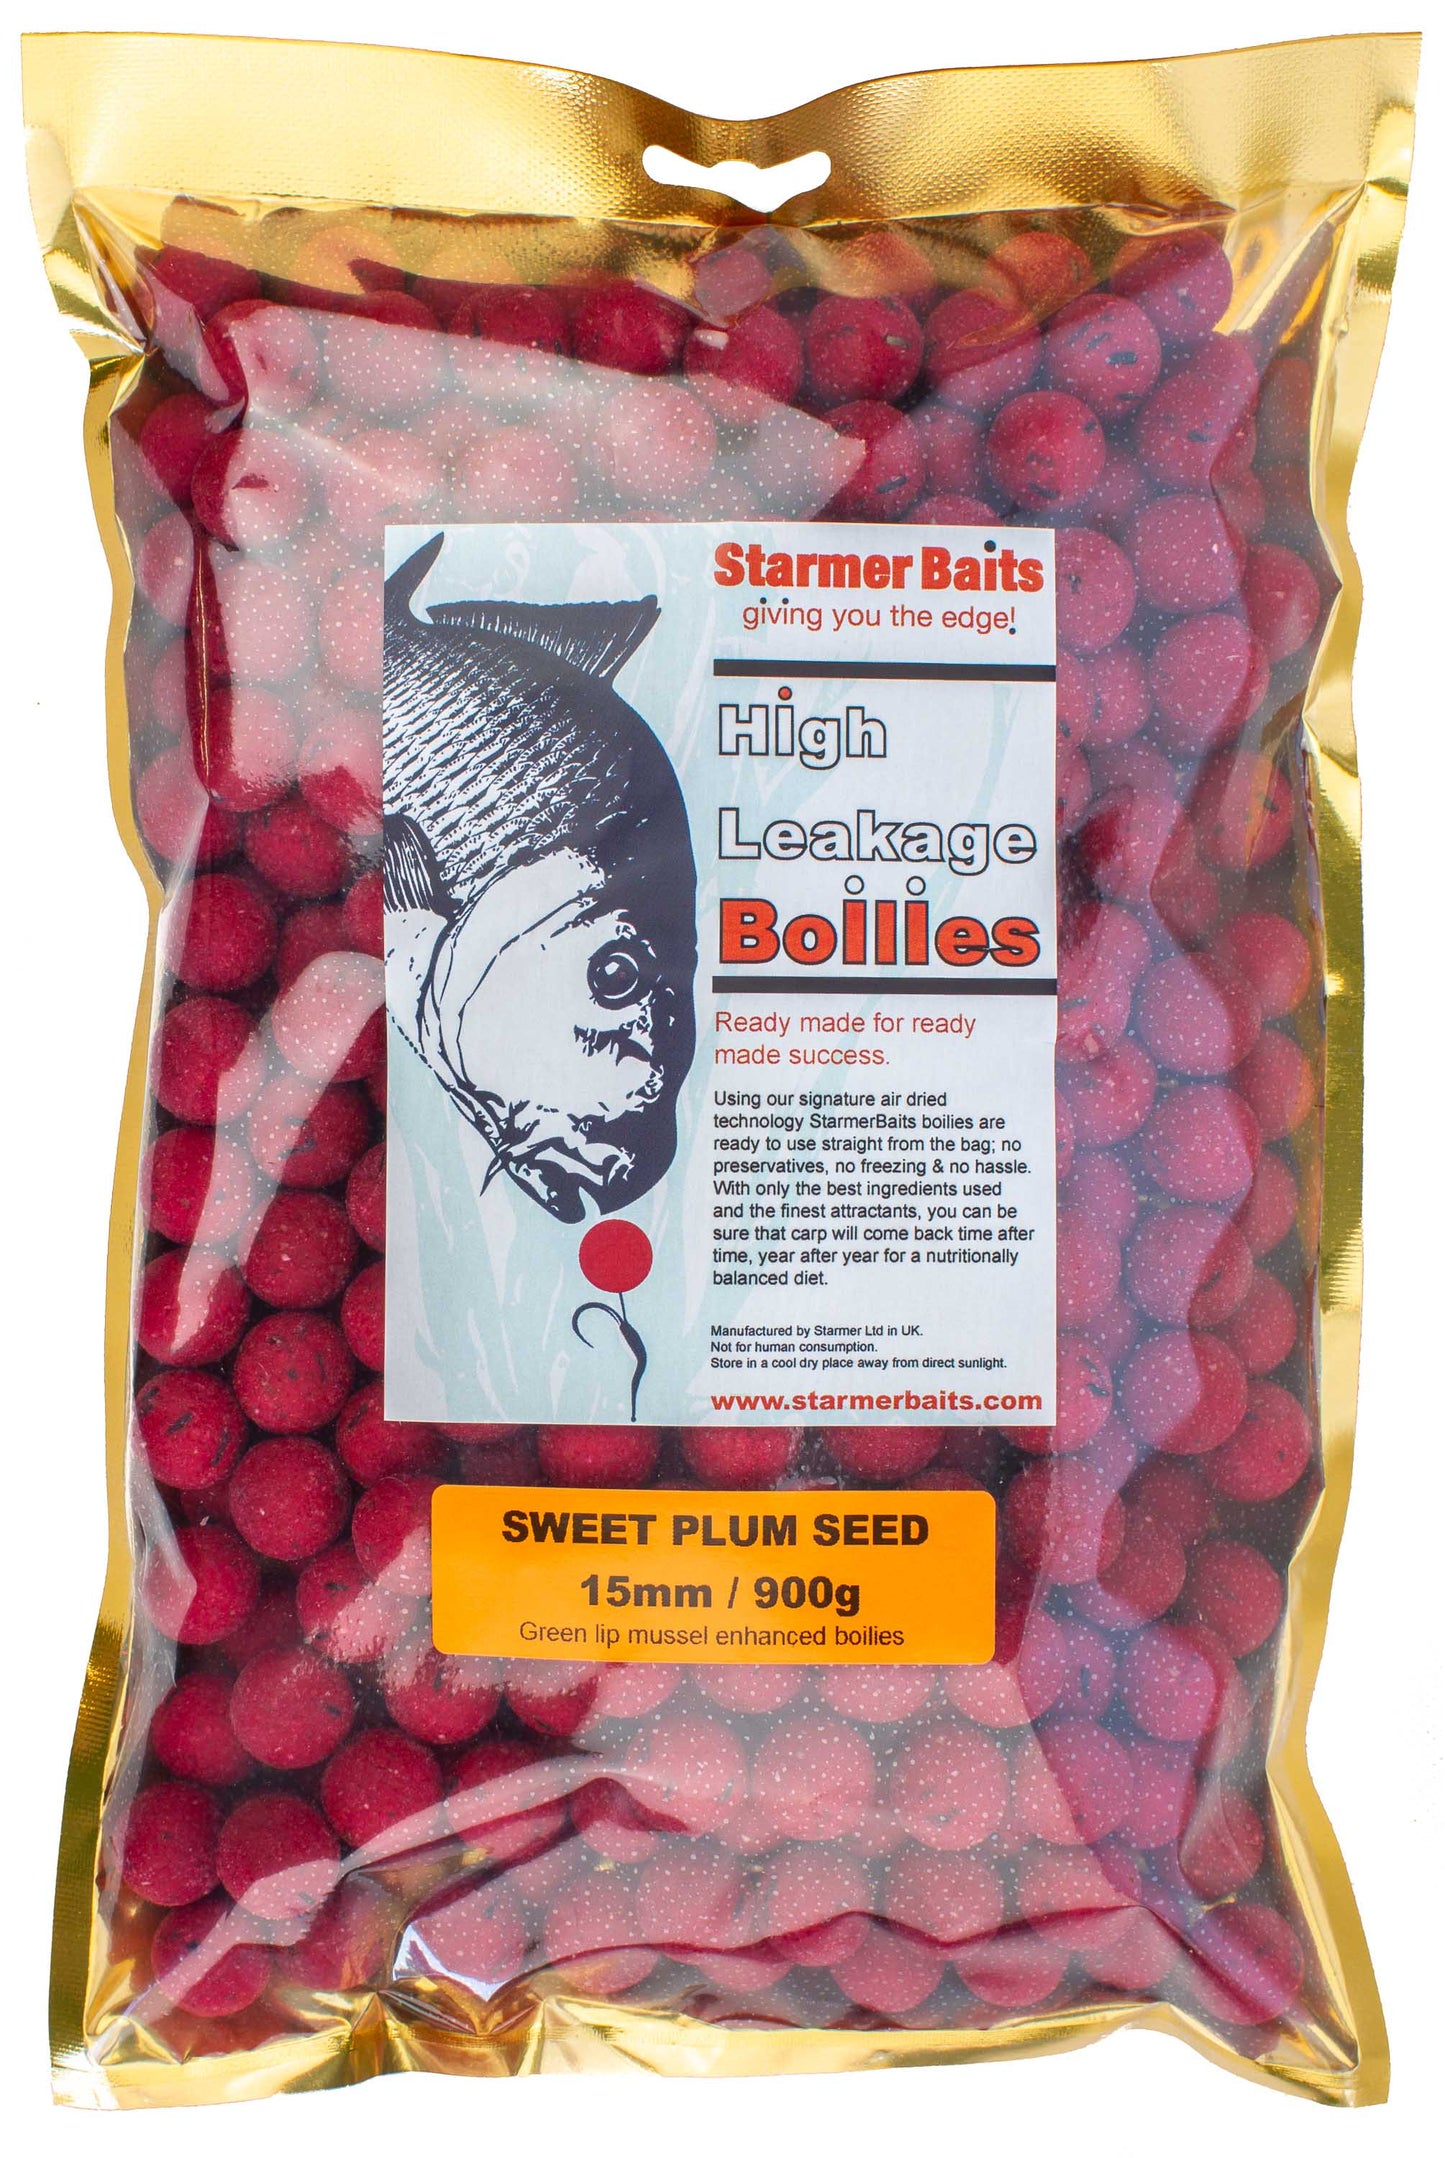 Sweet plum seed boilies 15mm